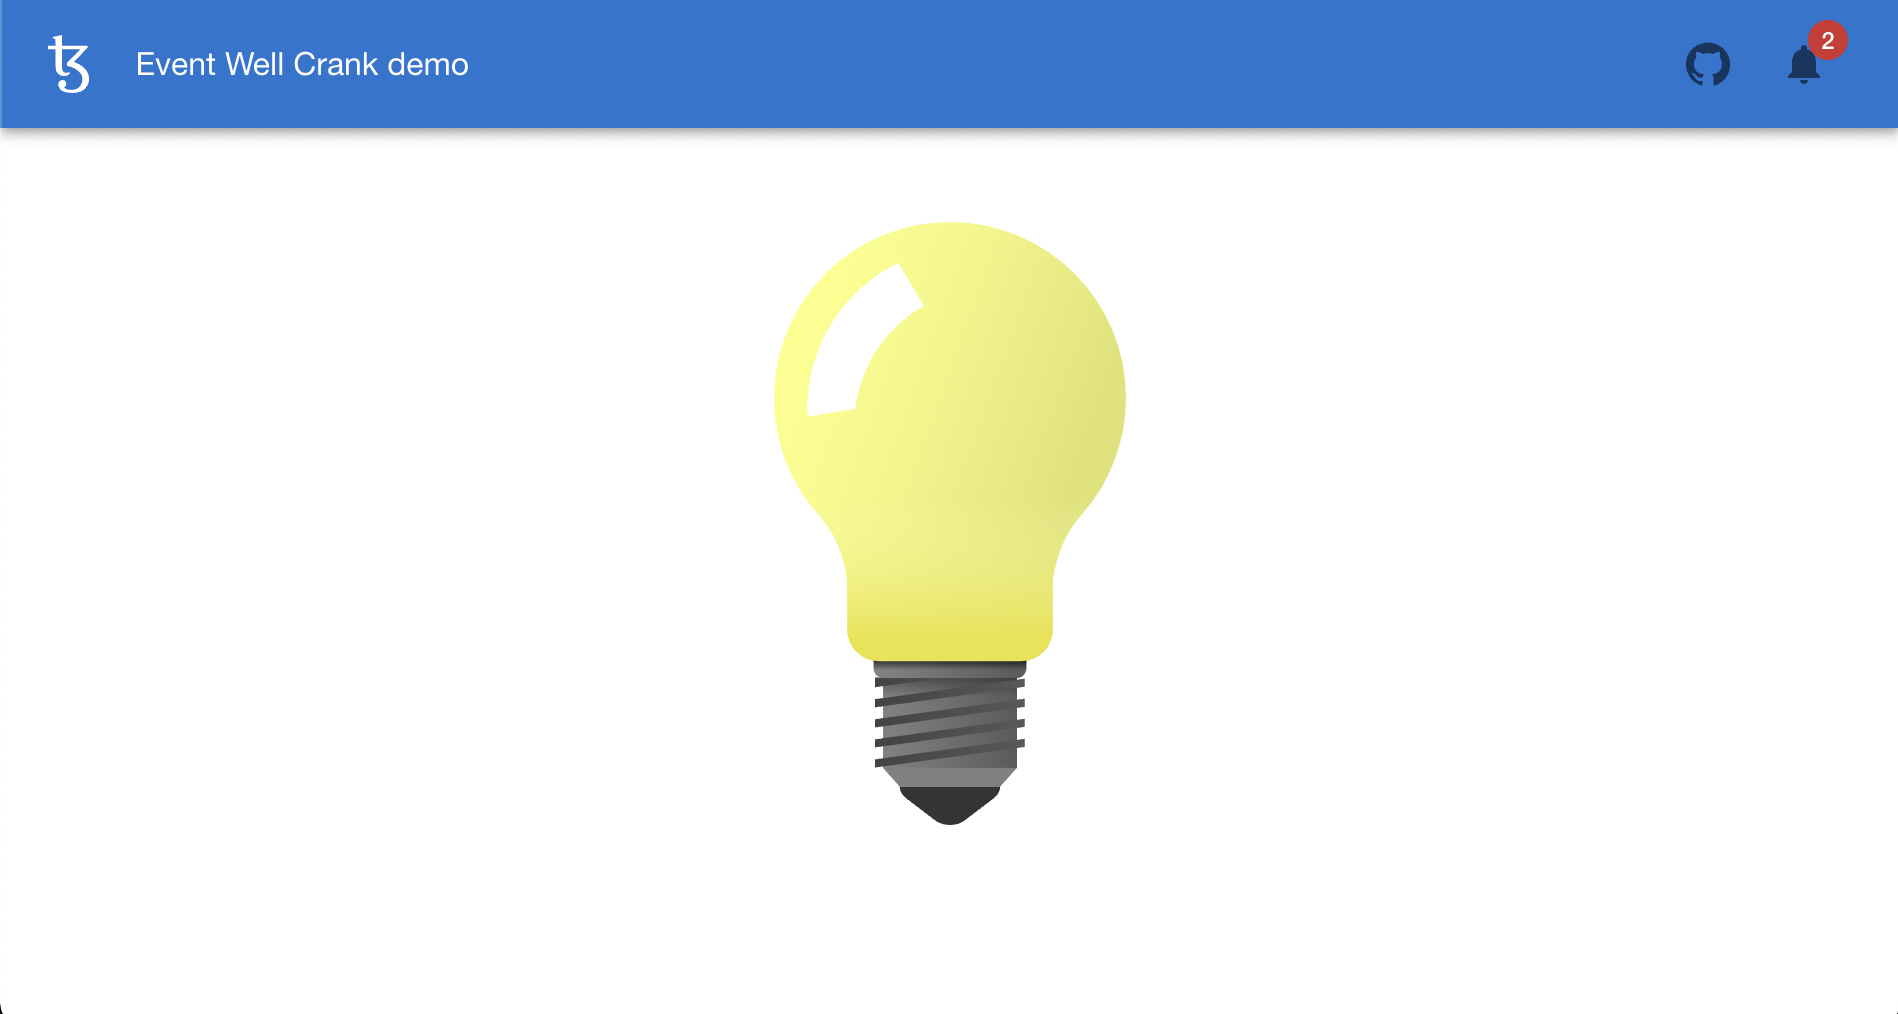 Buld Dapp webpage: an image of a light bulb